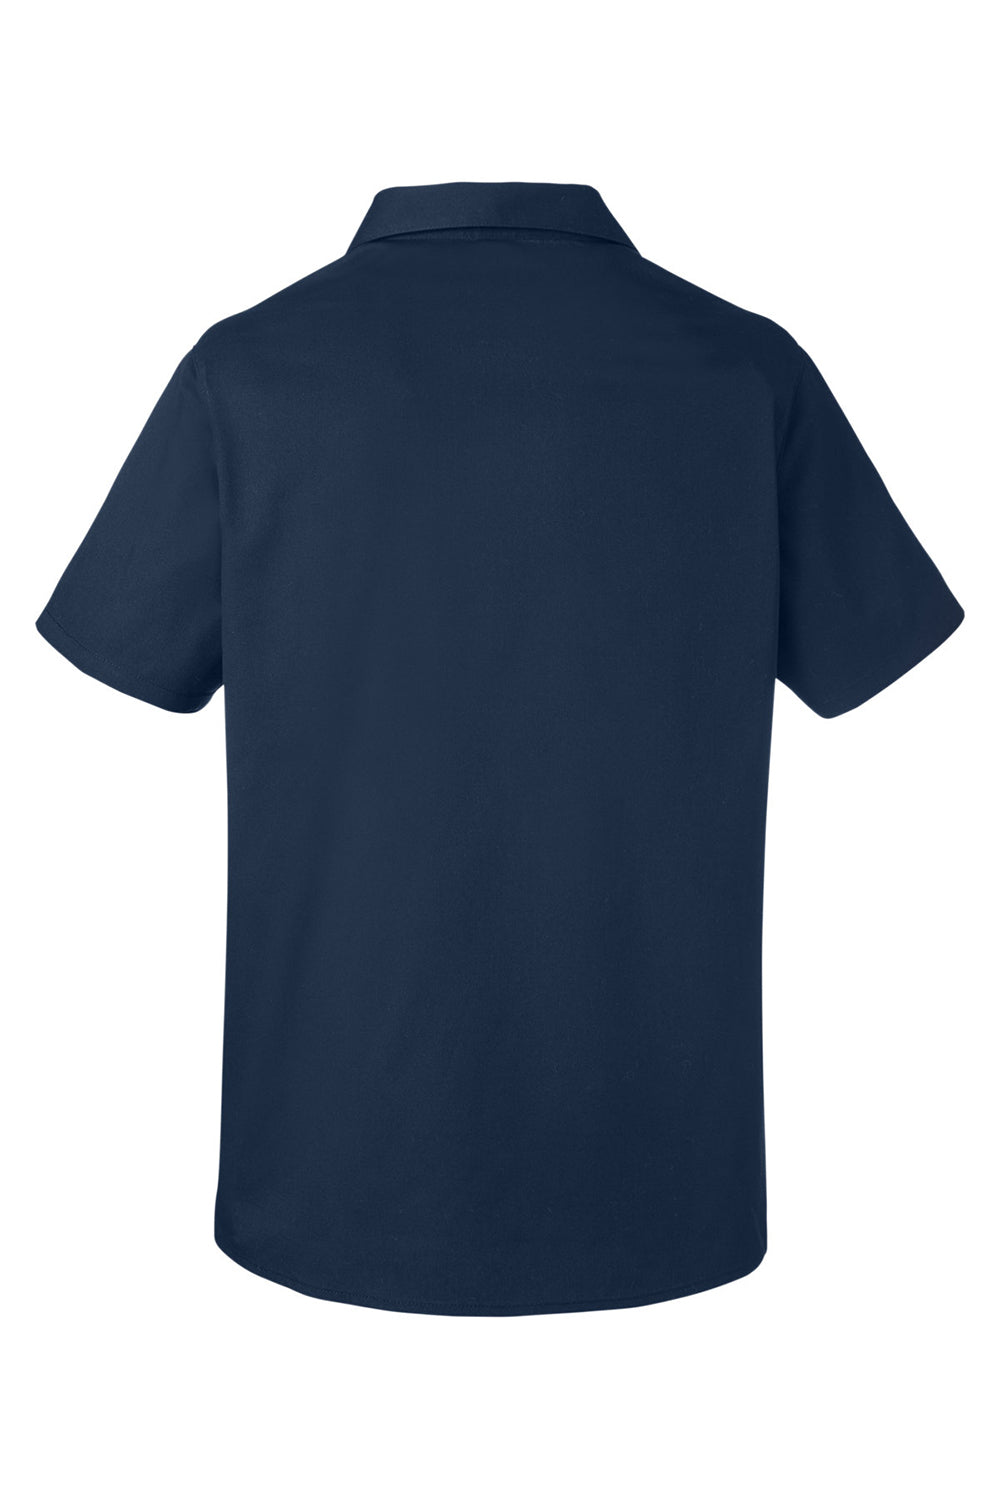 Harriton M585W Womens Advantage Short Sleeve Button Down Shirt w/ Double Pockets Dark Navy Blue Flat Back